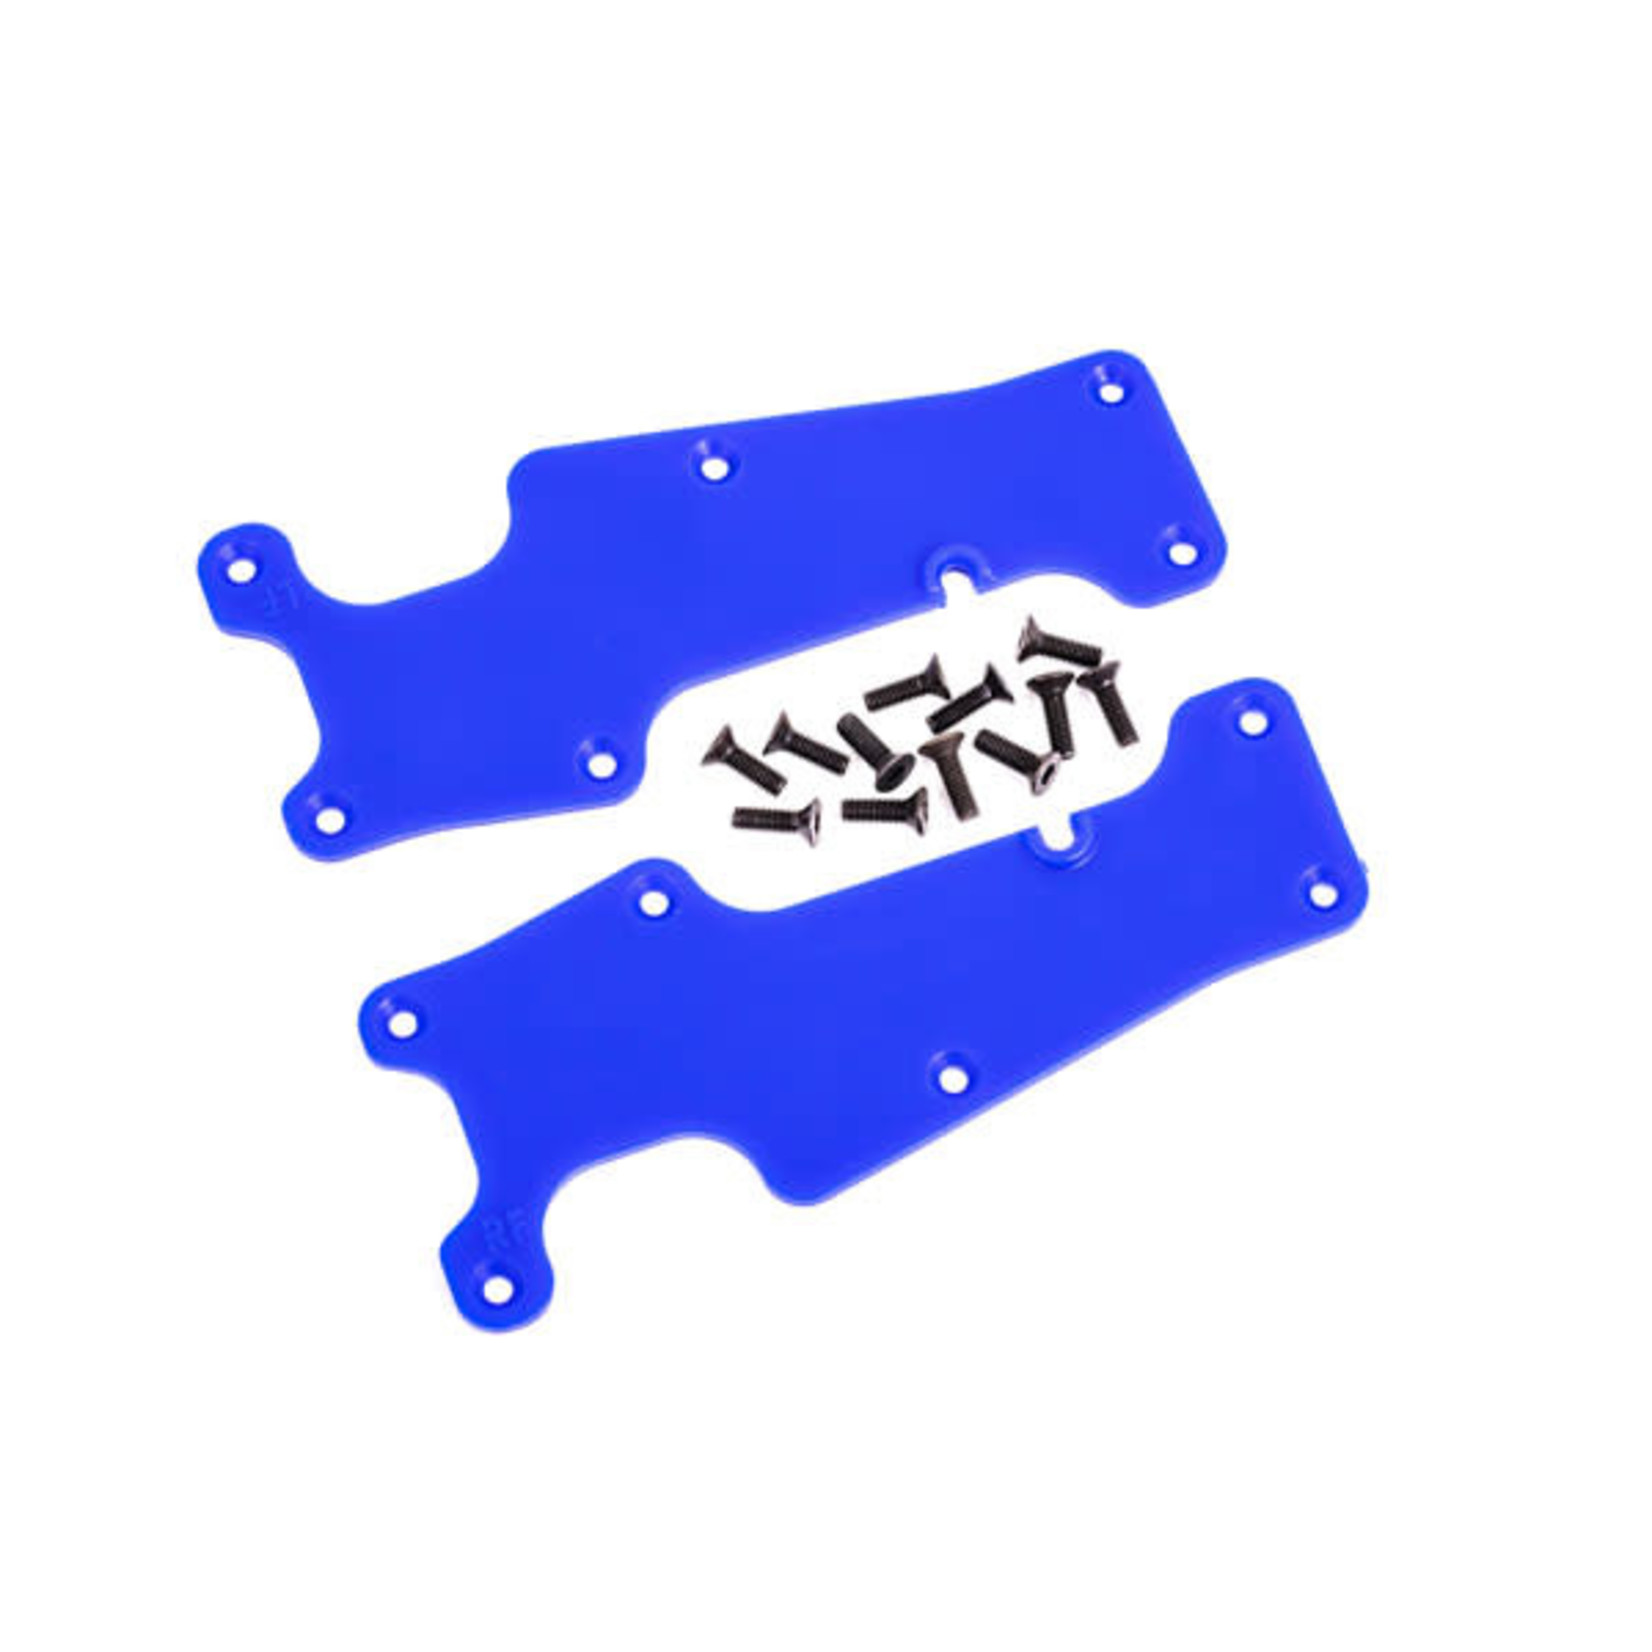 Traxxas Traxxas Sledge Front Suspension Arm Covers (Blue) (2) #9633X